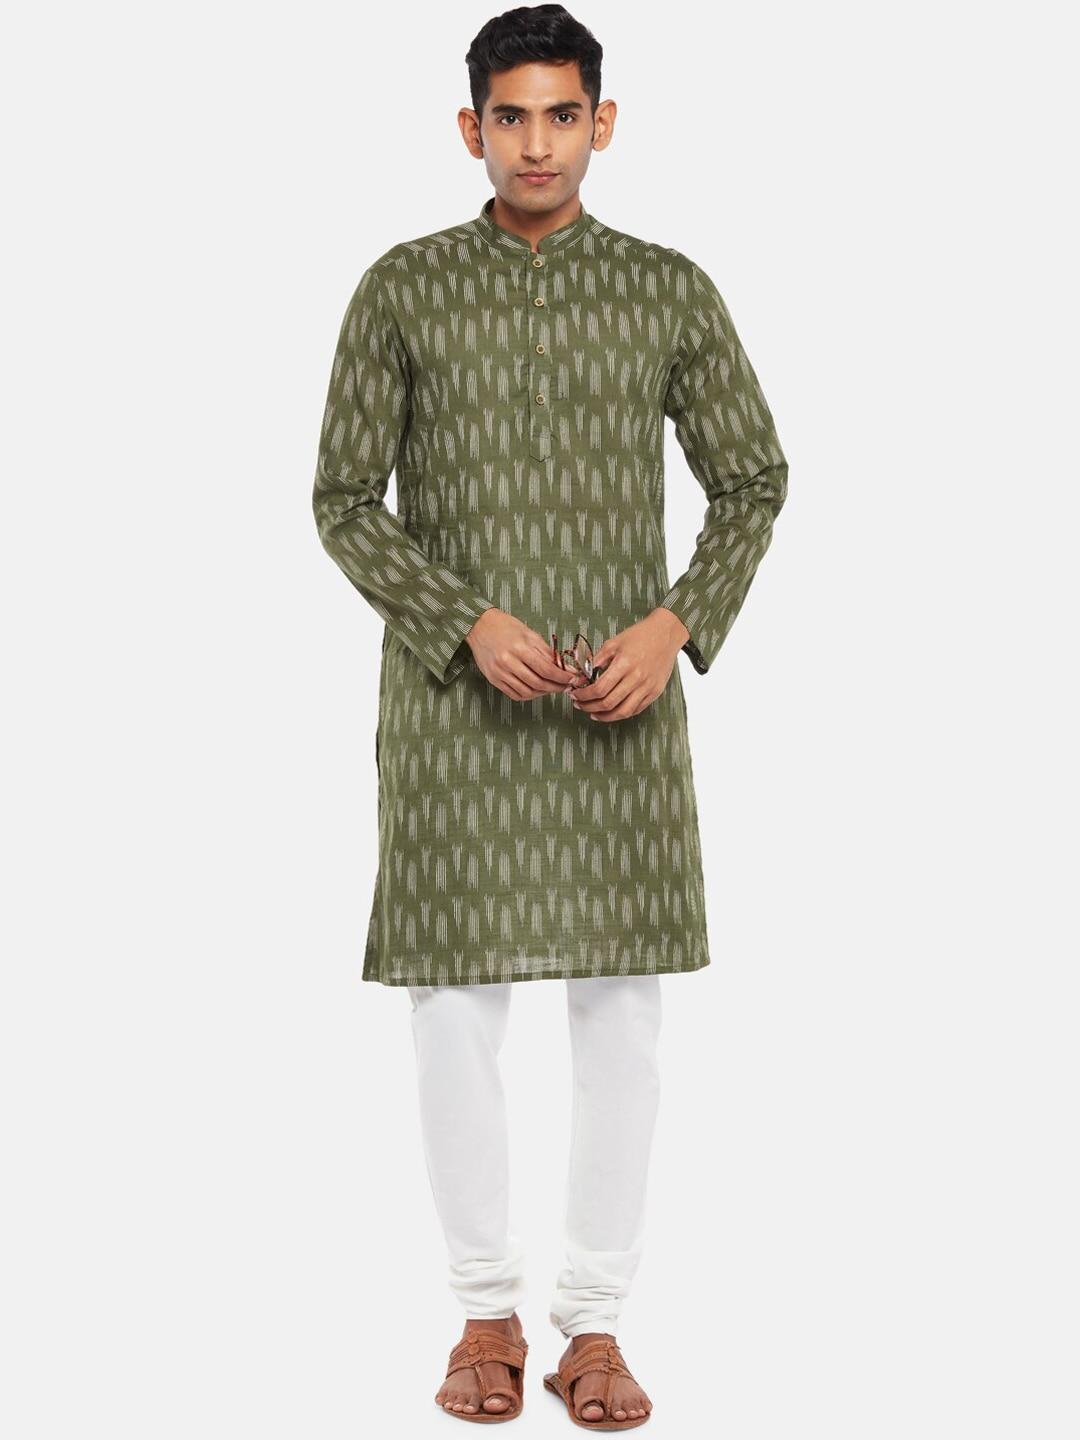 indus route by pantaloons men olive green geometric print cotton kurta